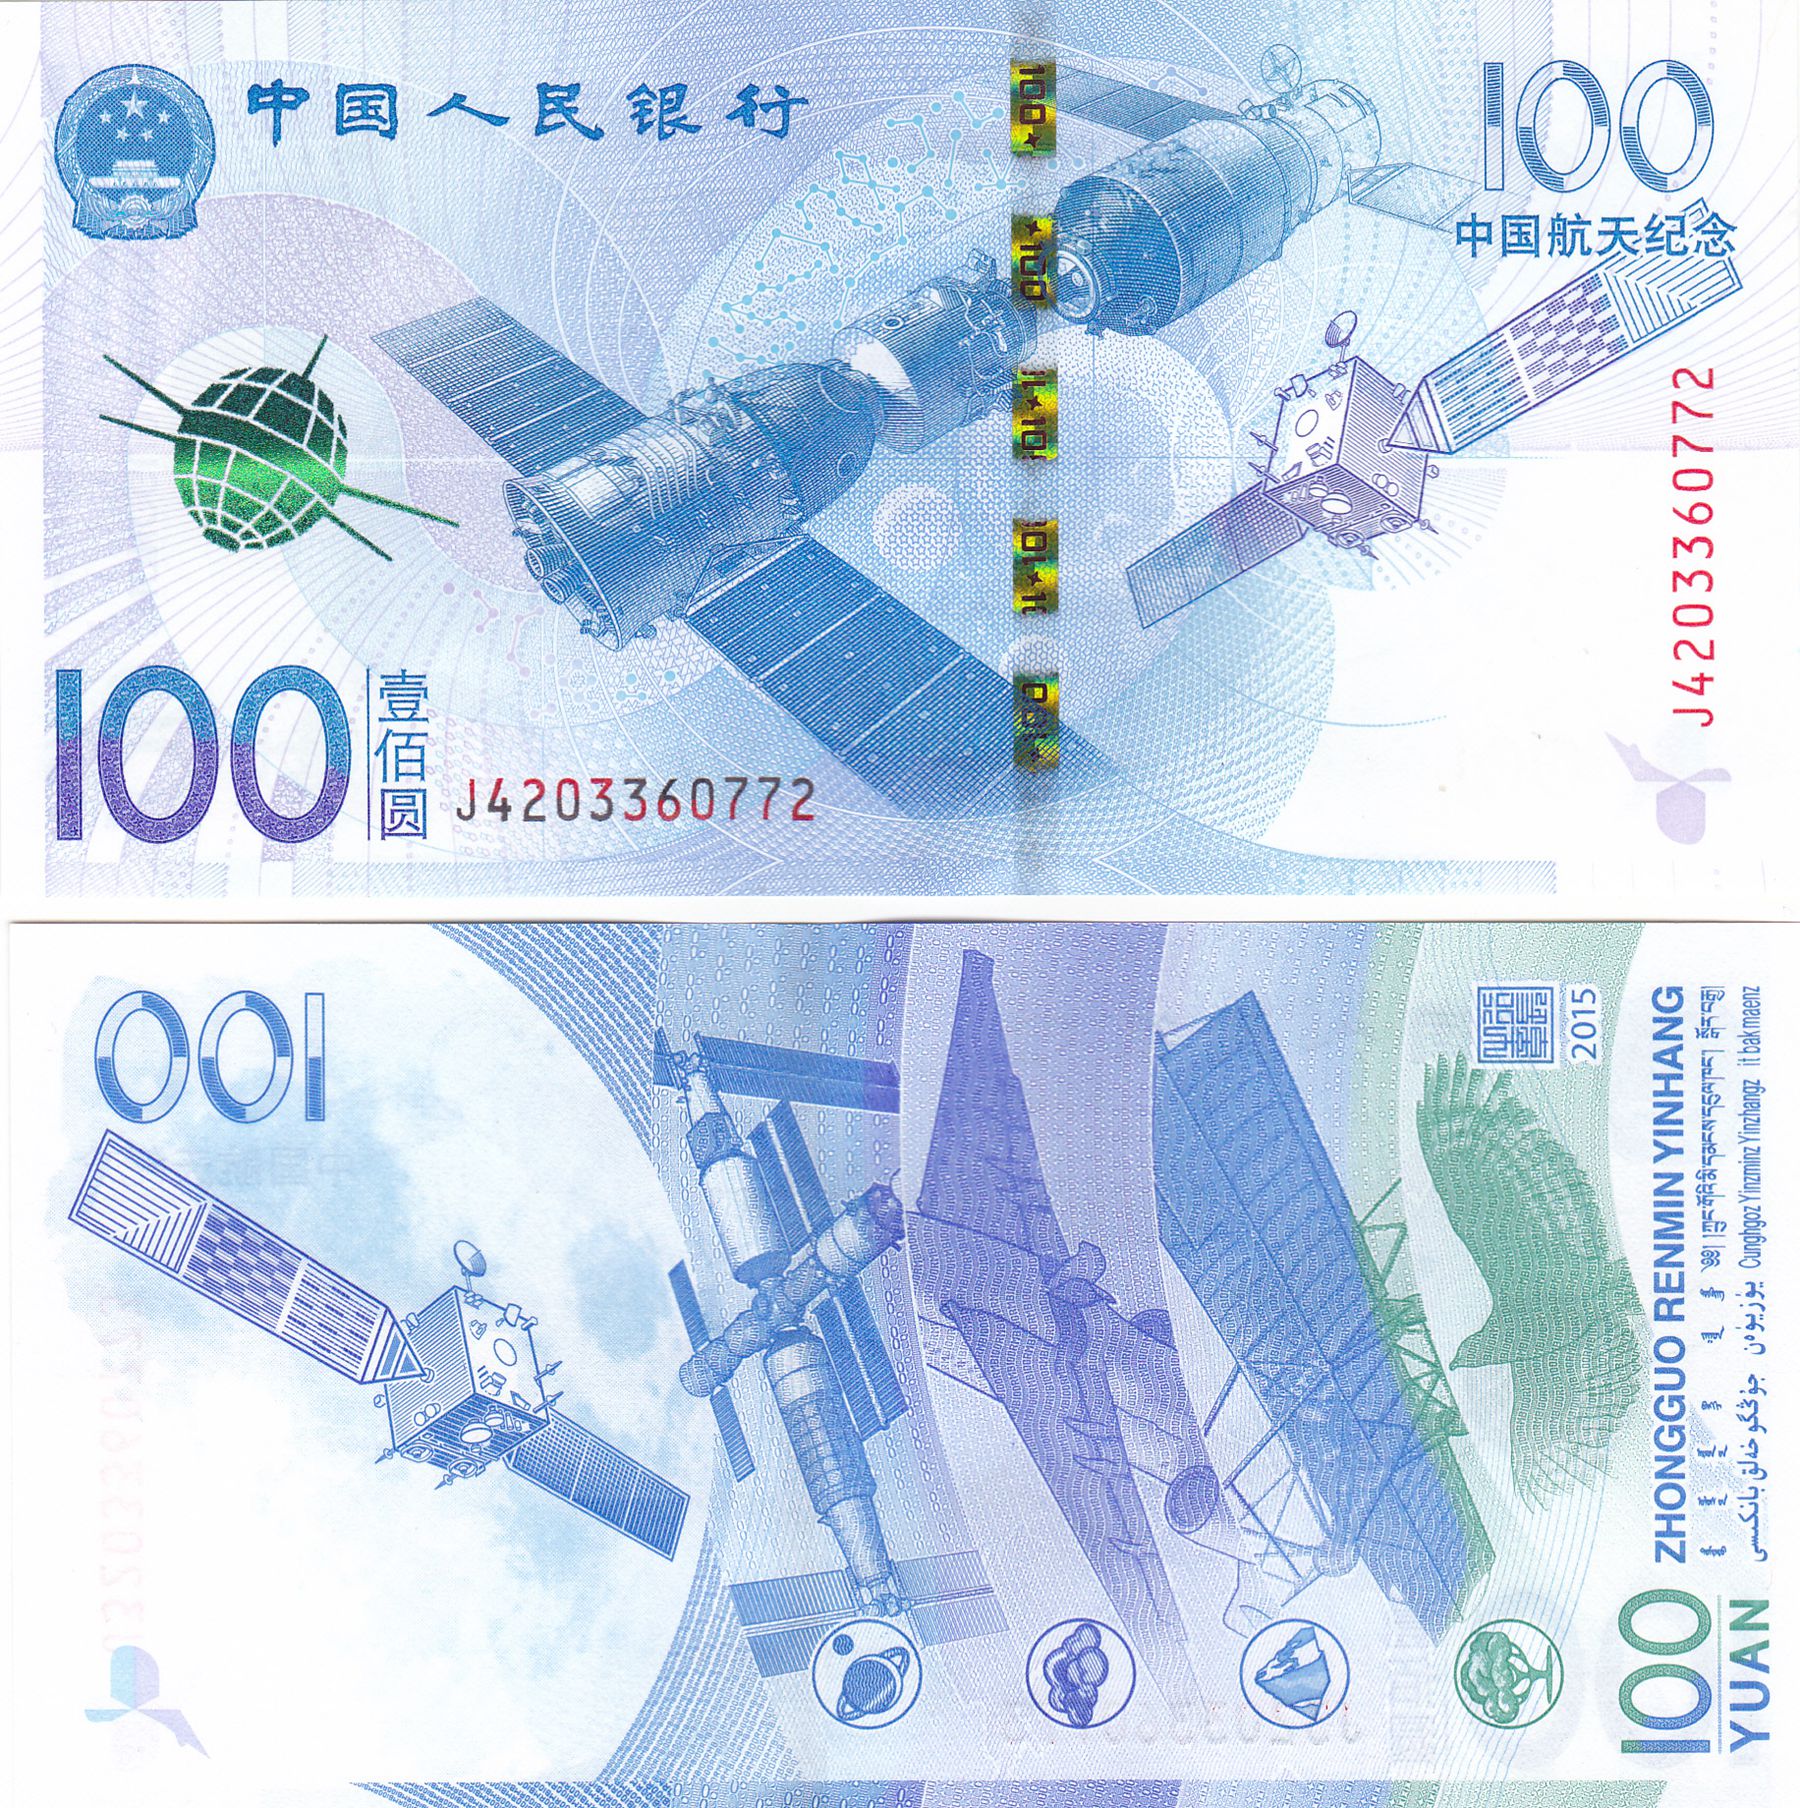 N0155, China 2015 Commemorative Banknote, 100 Yuan Paper Money